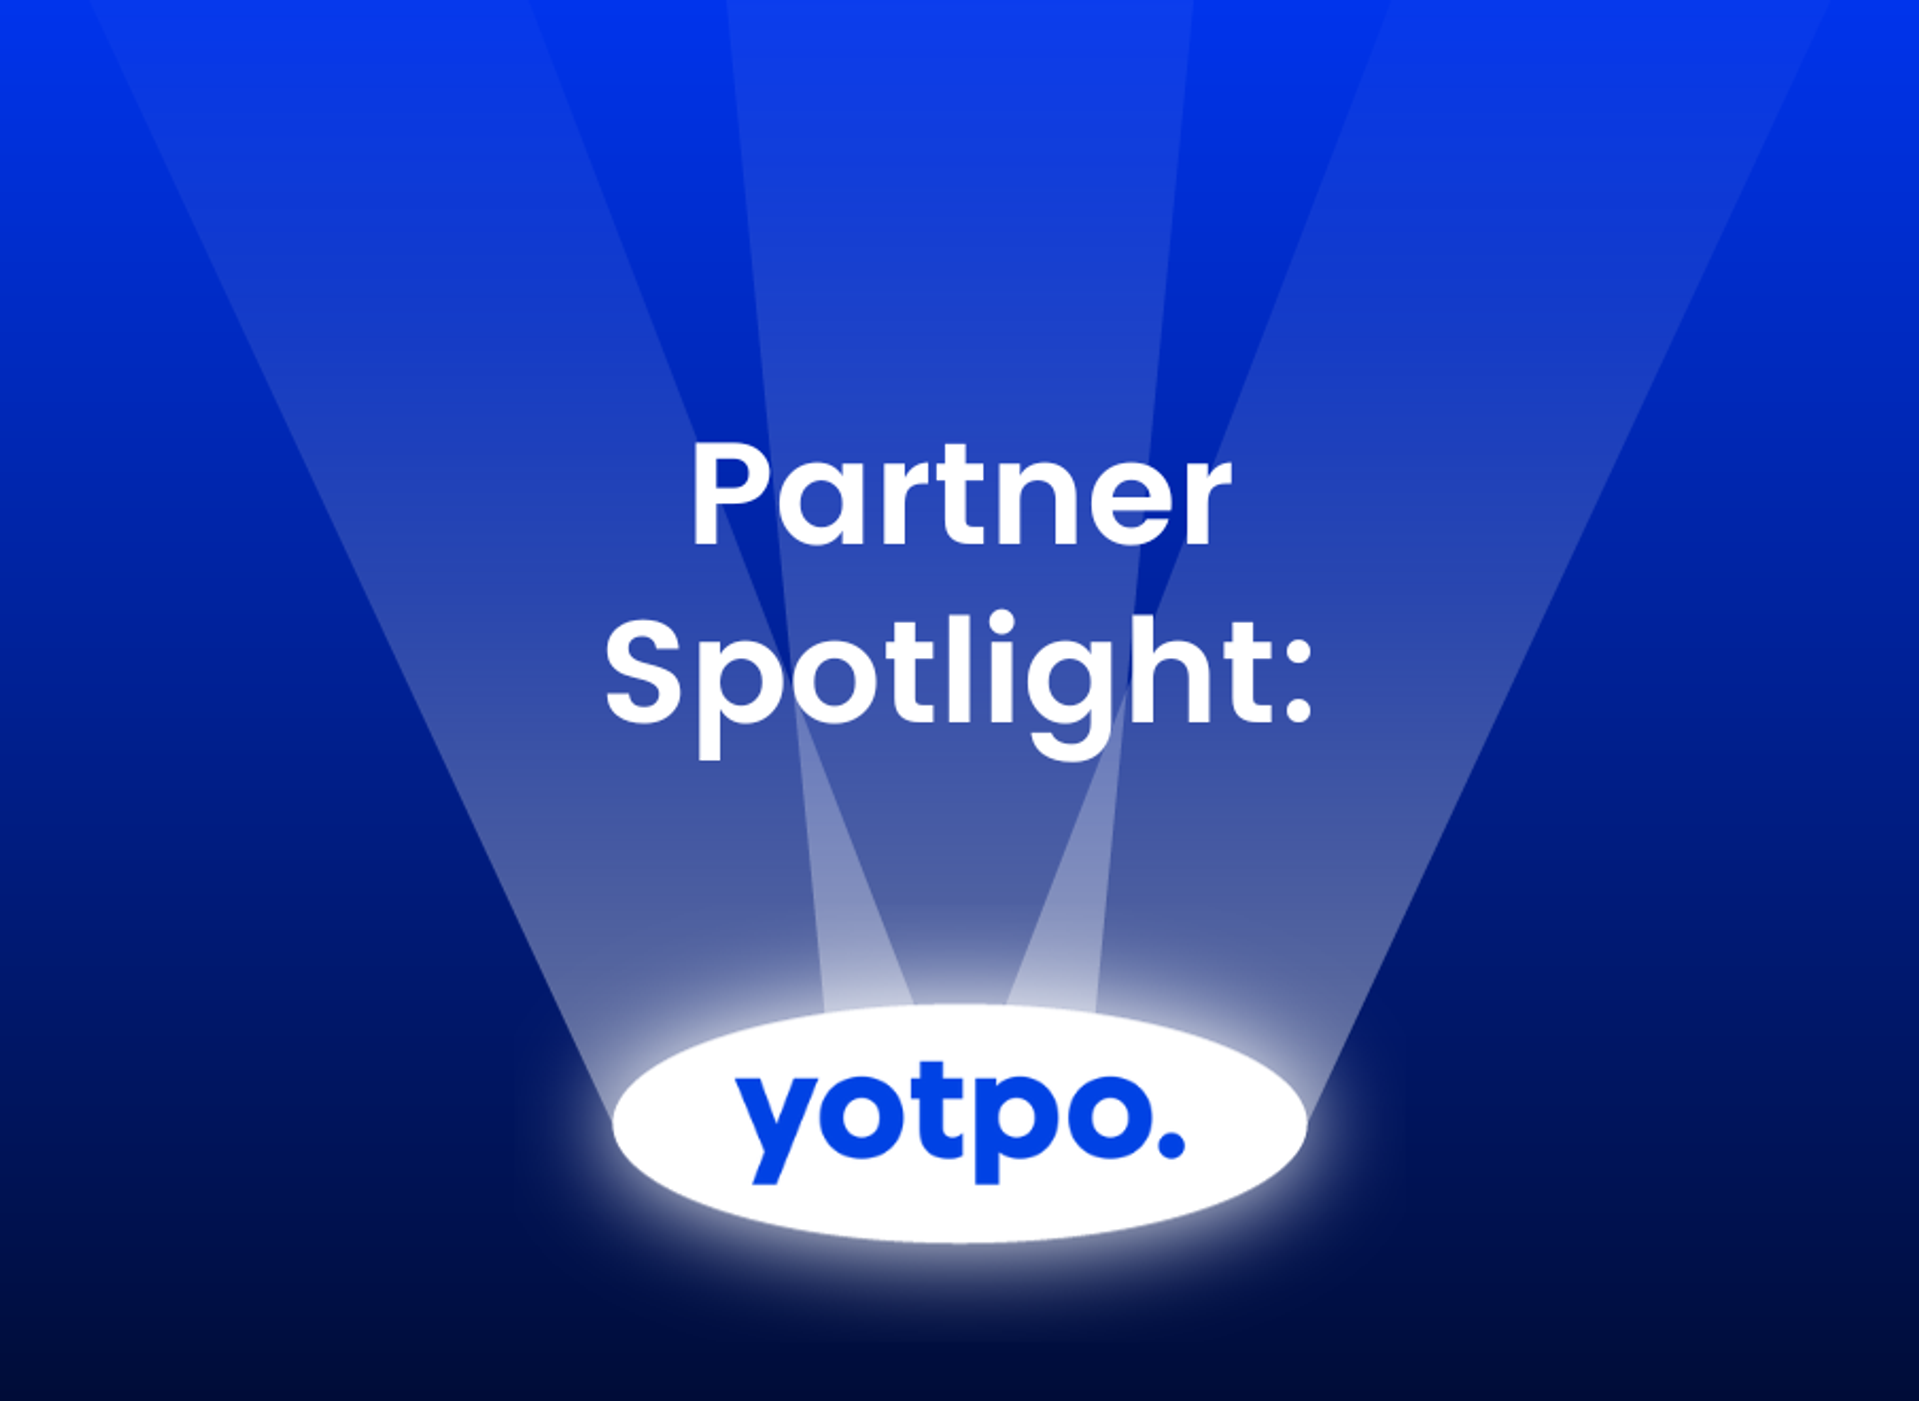 A spotlight on the Yotpo logo